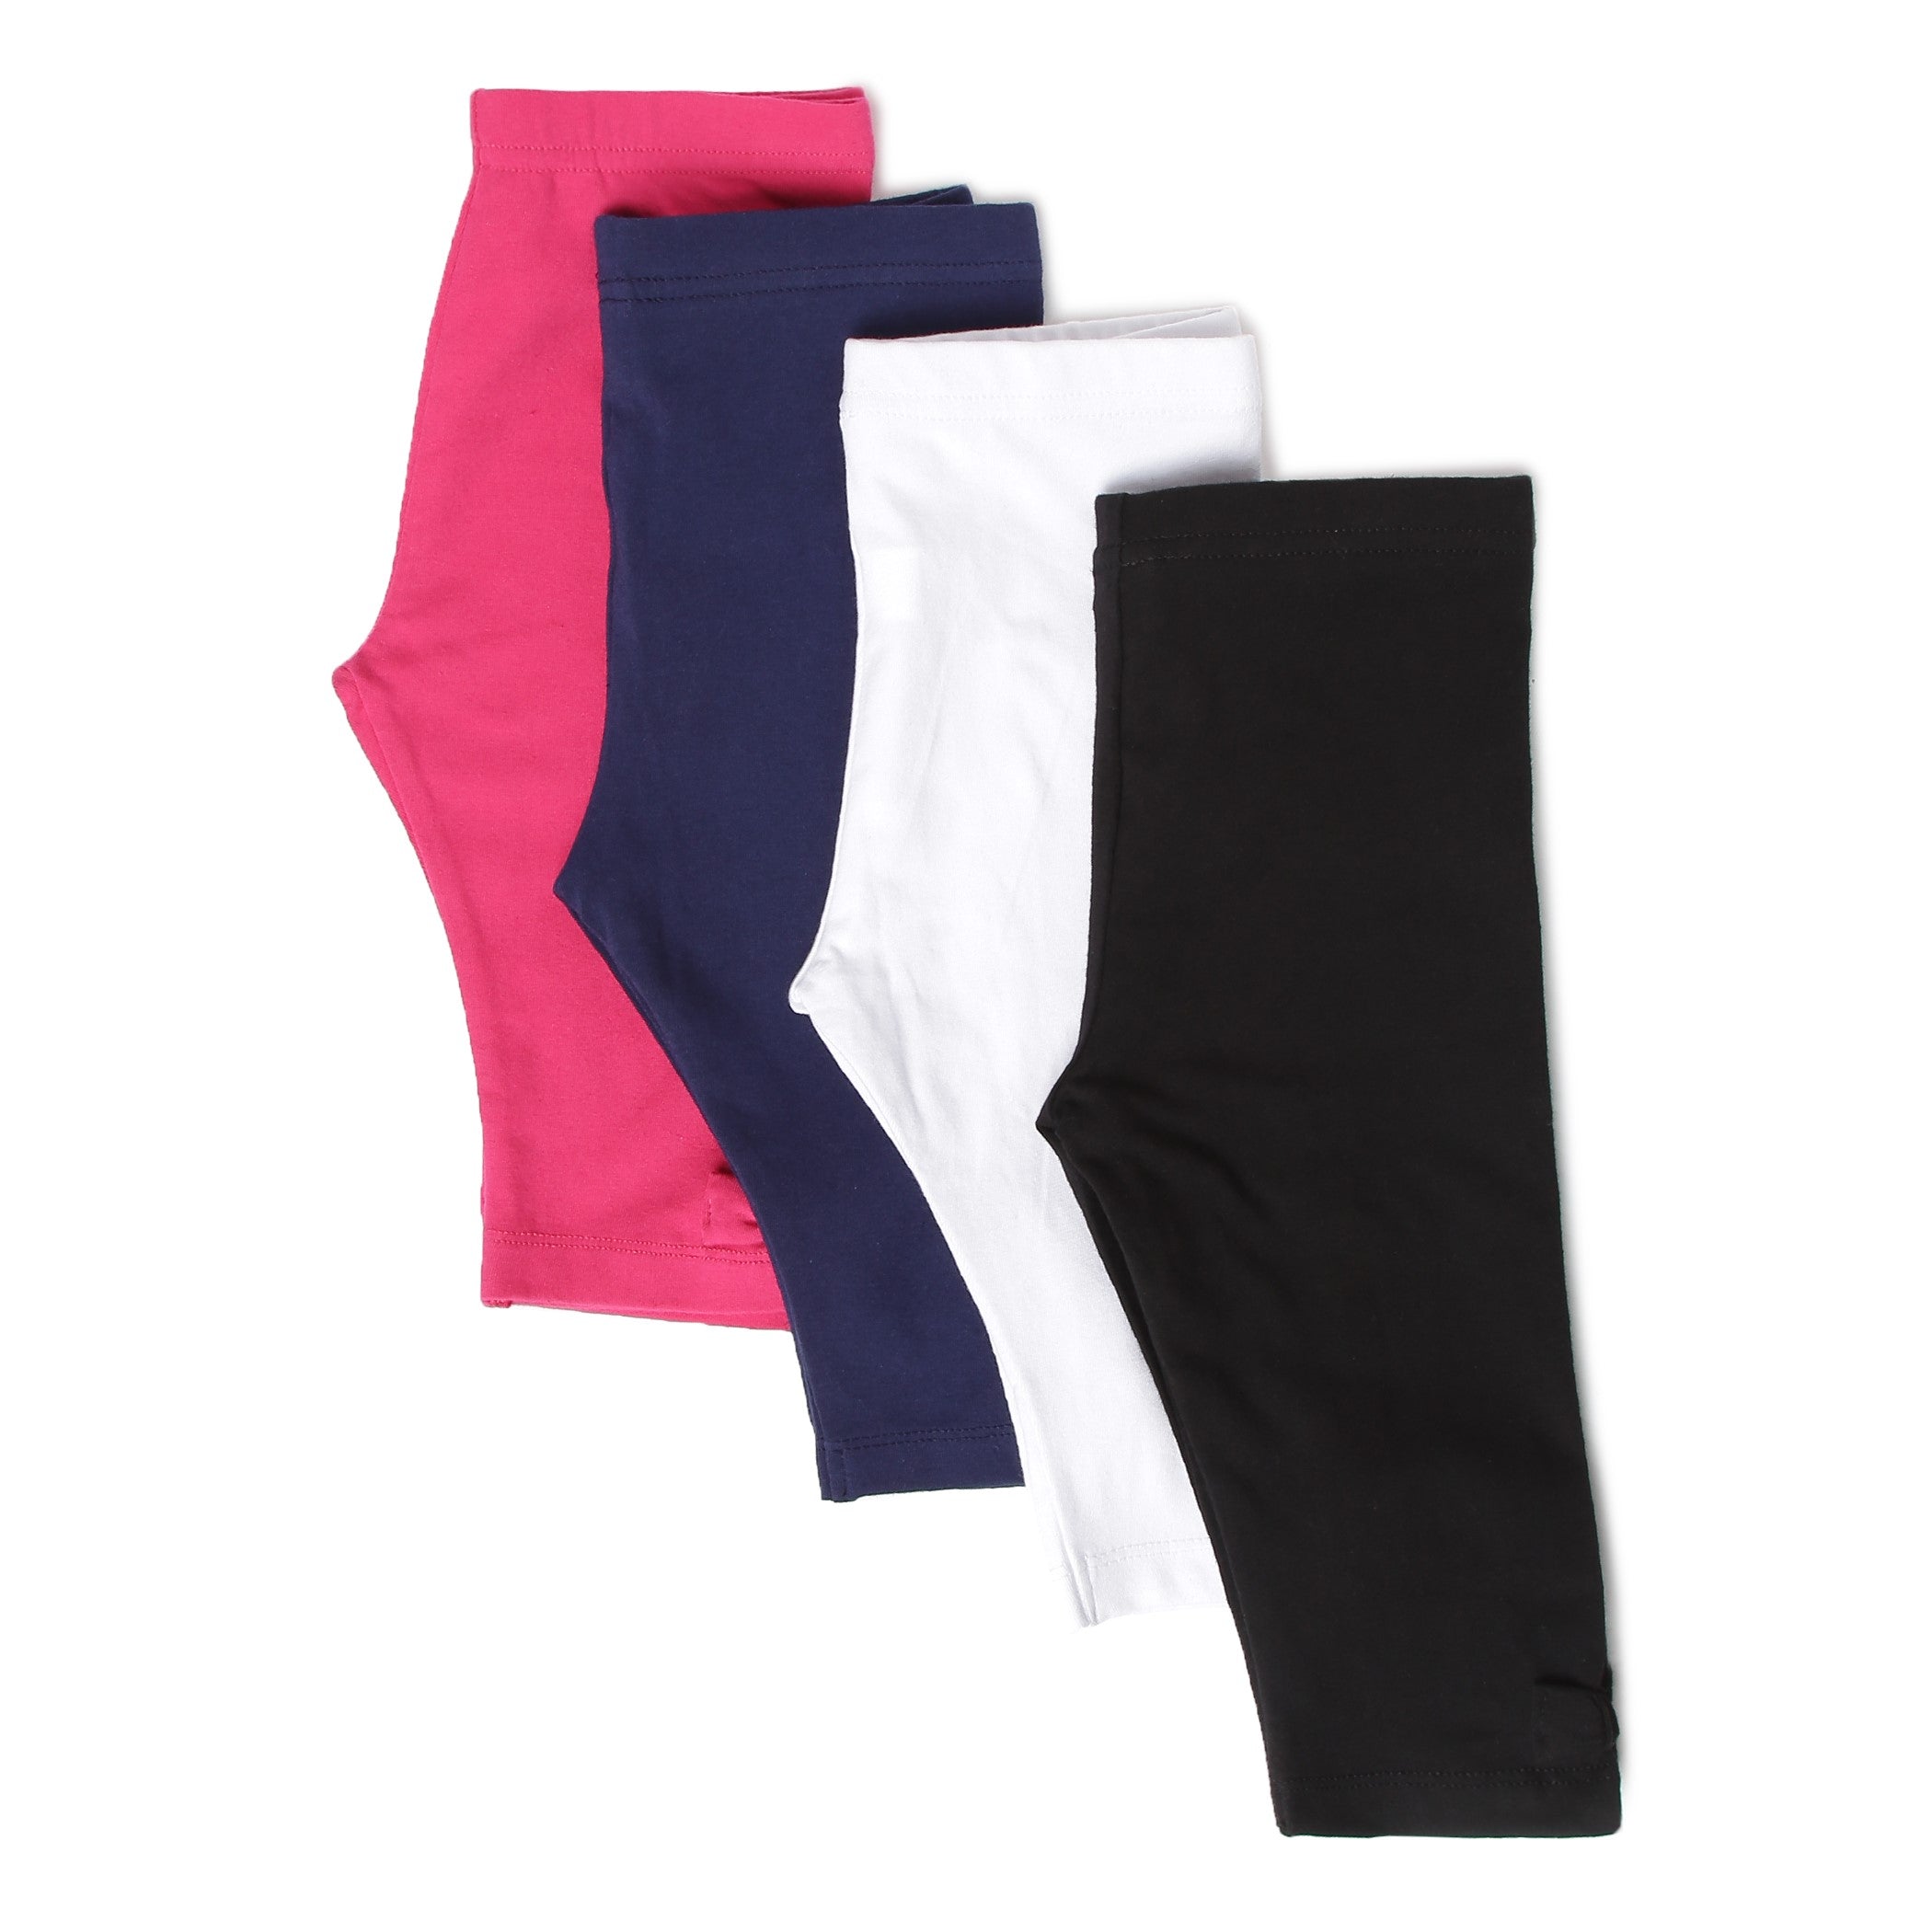 Shop Online Girls Pink All-Over Print Skirt Leggings at ₹499